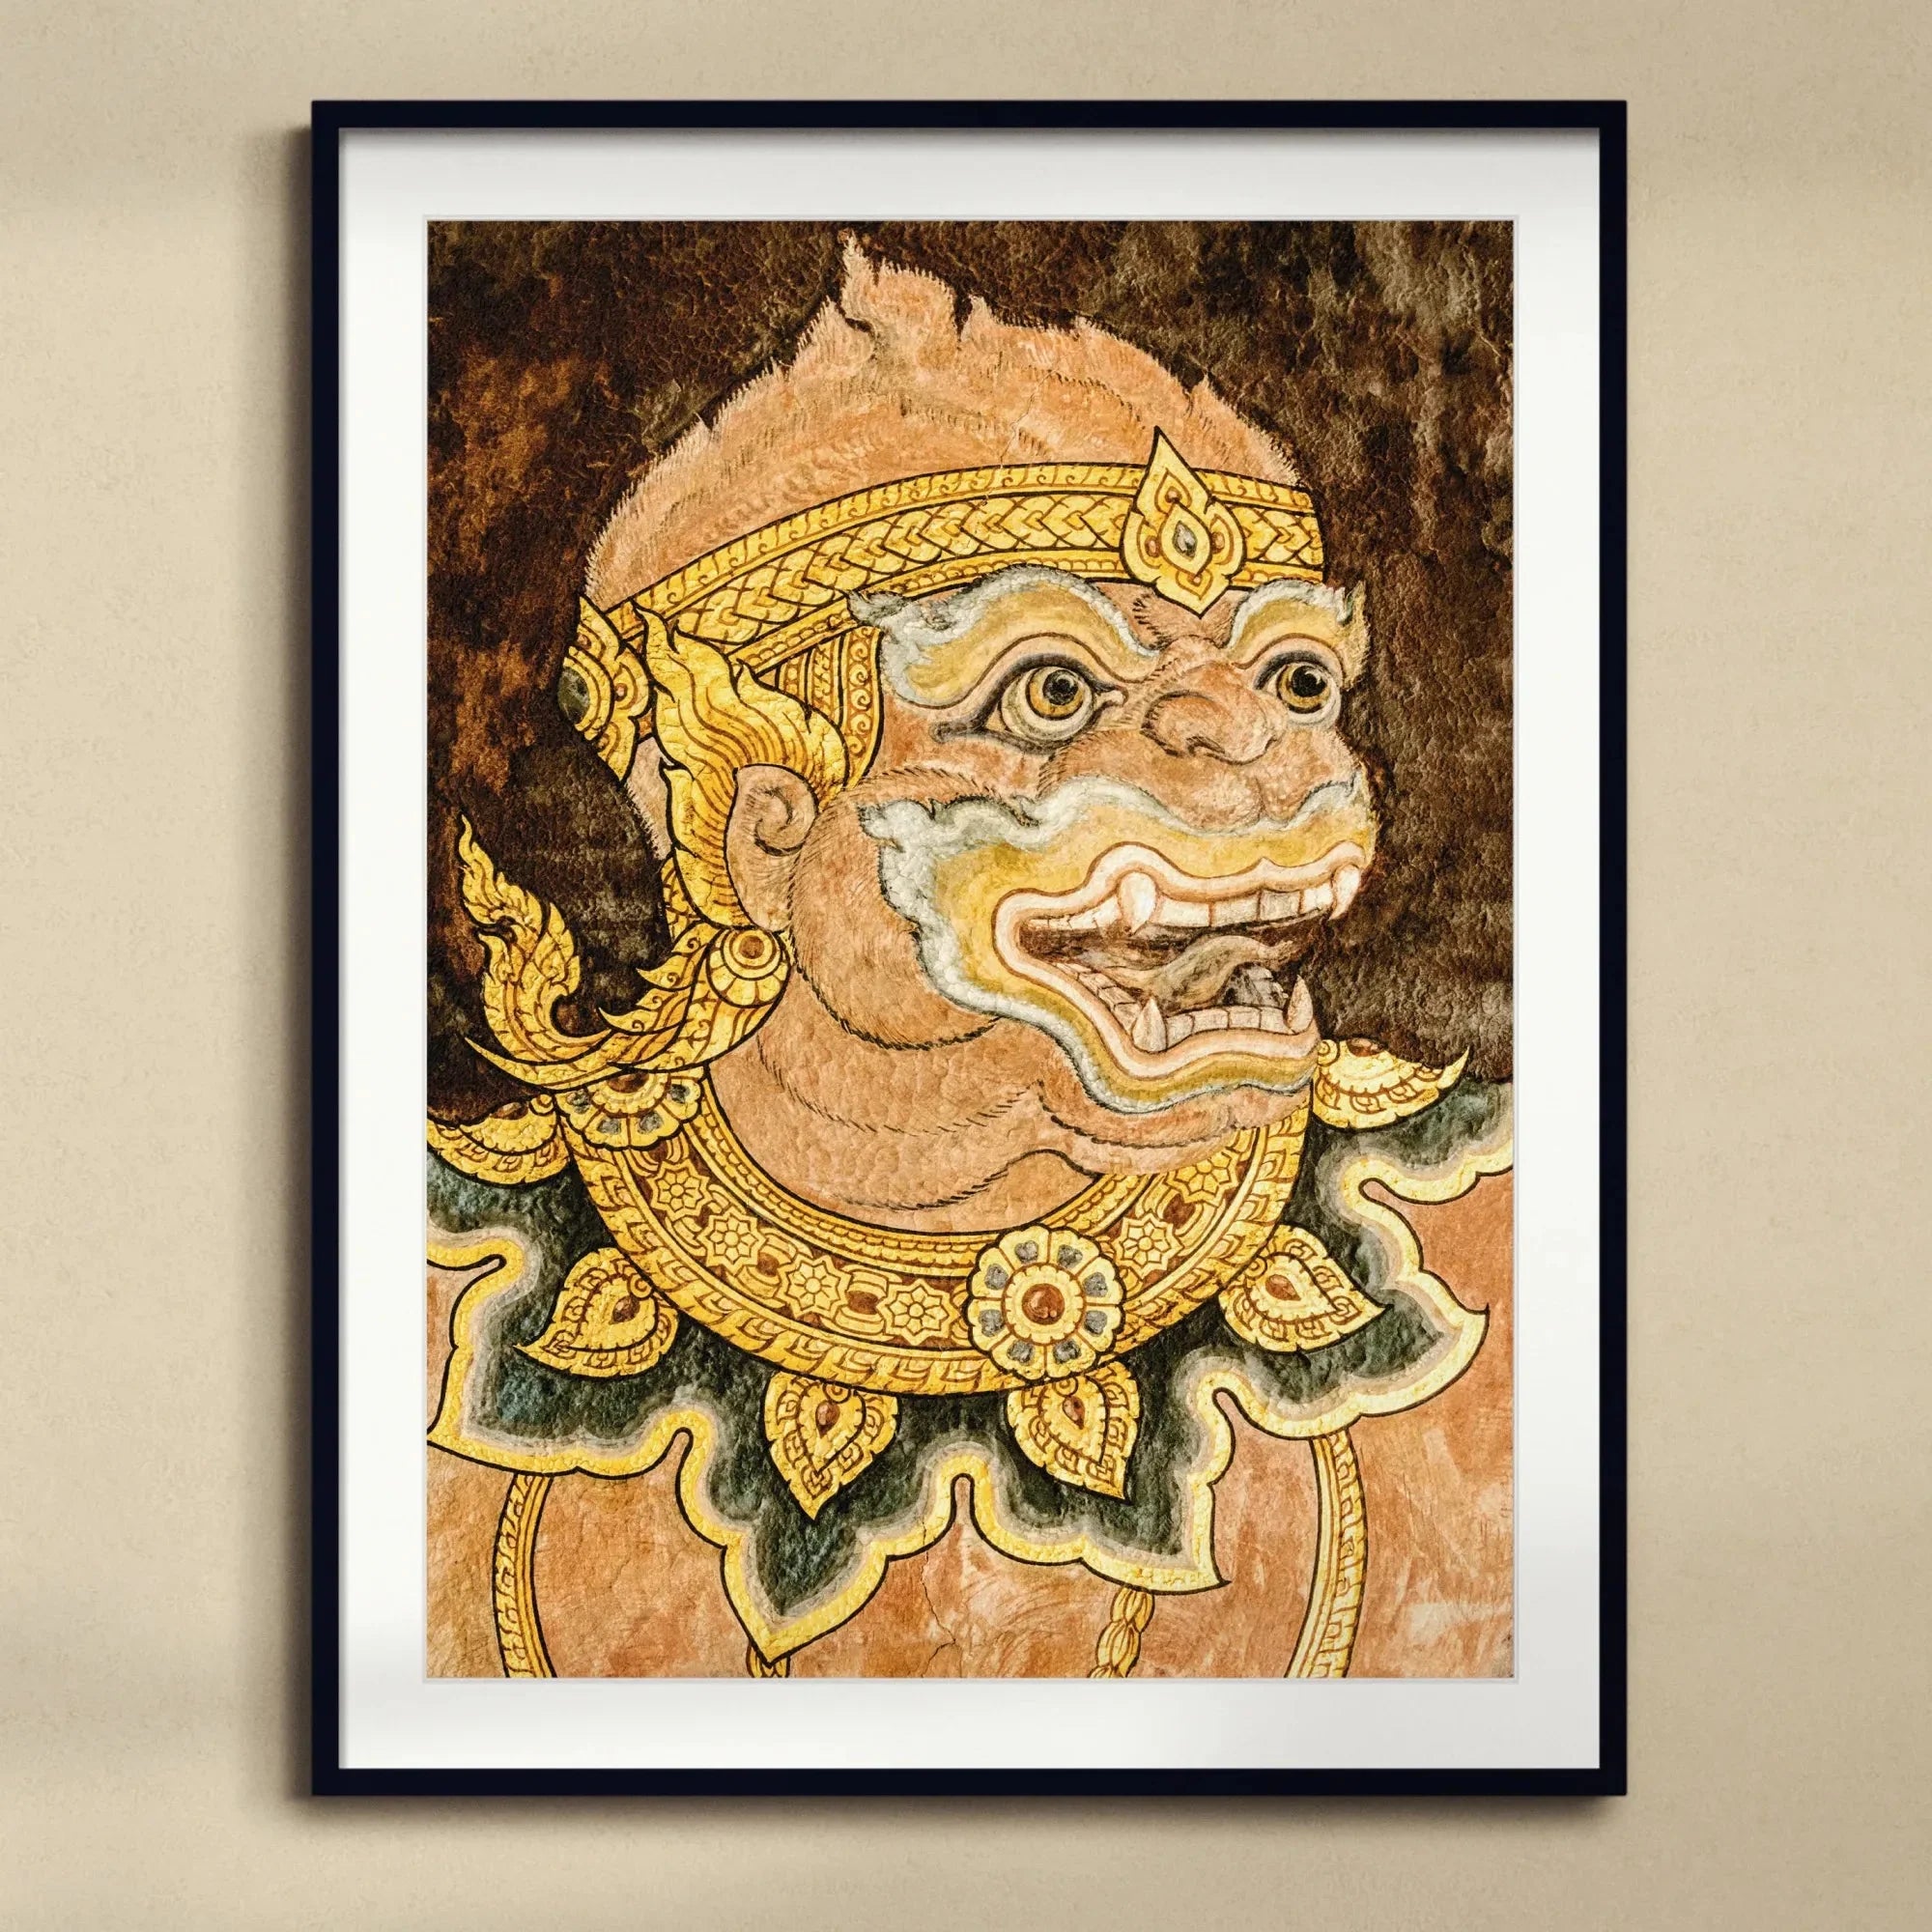 Monkey See Framed & Mounted Print - Posters Prints & Visual Artwork - Aesthetic Art